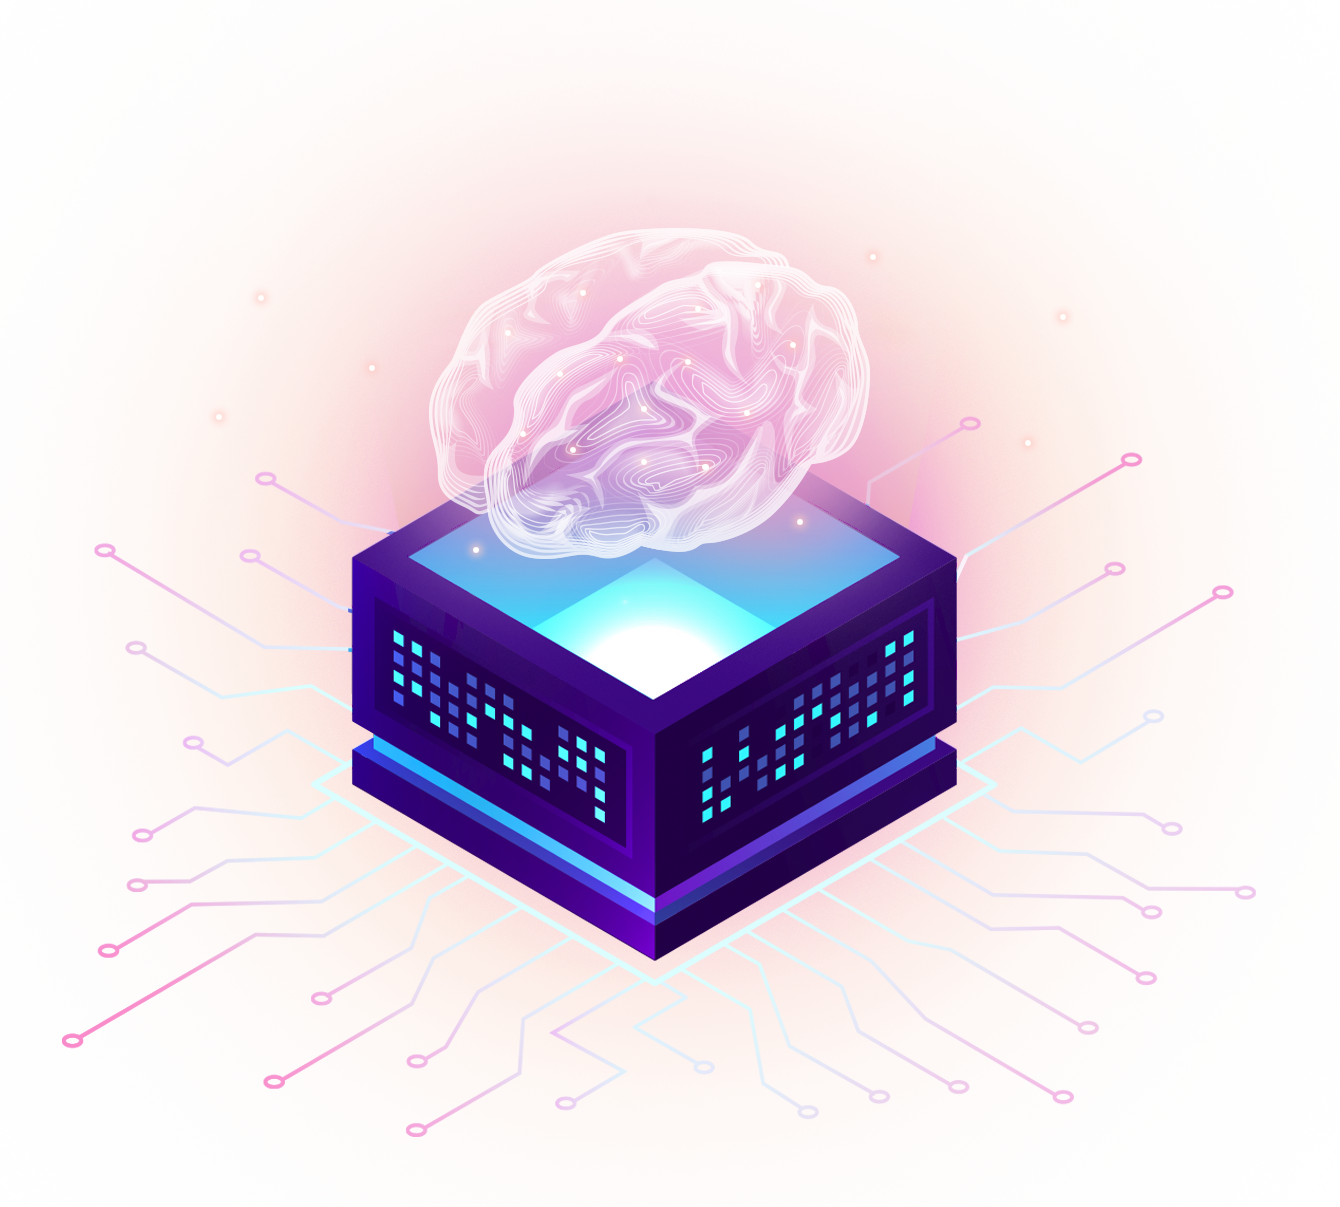 Transparent brain on a purple box